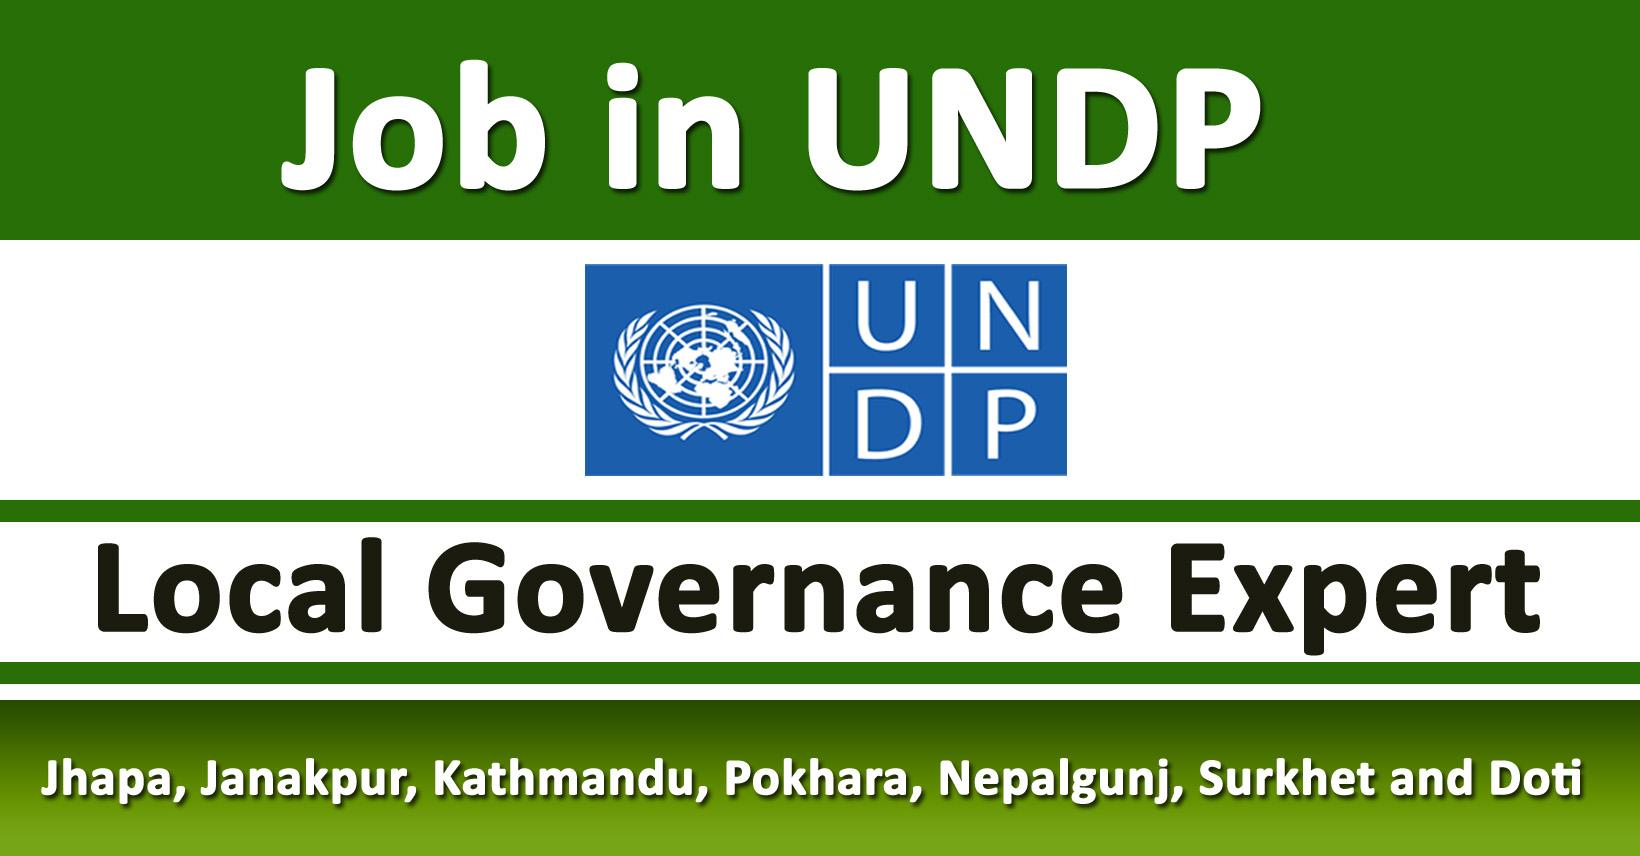 Local Governance Expert - Job in Nepal - UNDP - Merorojgari